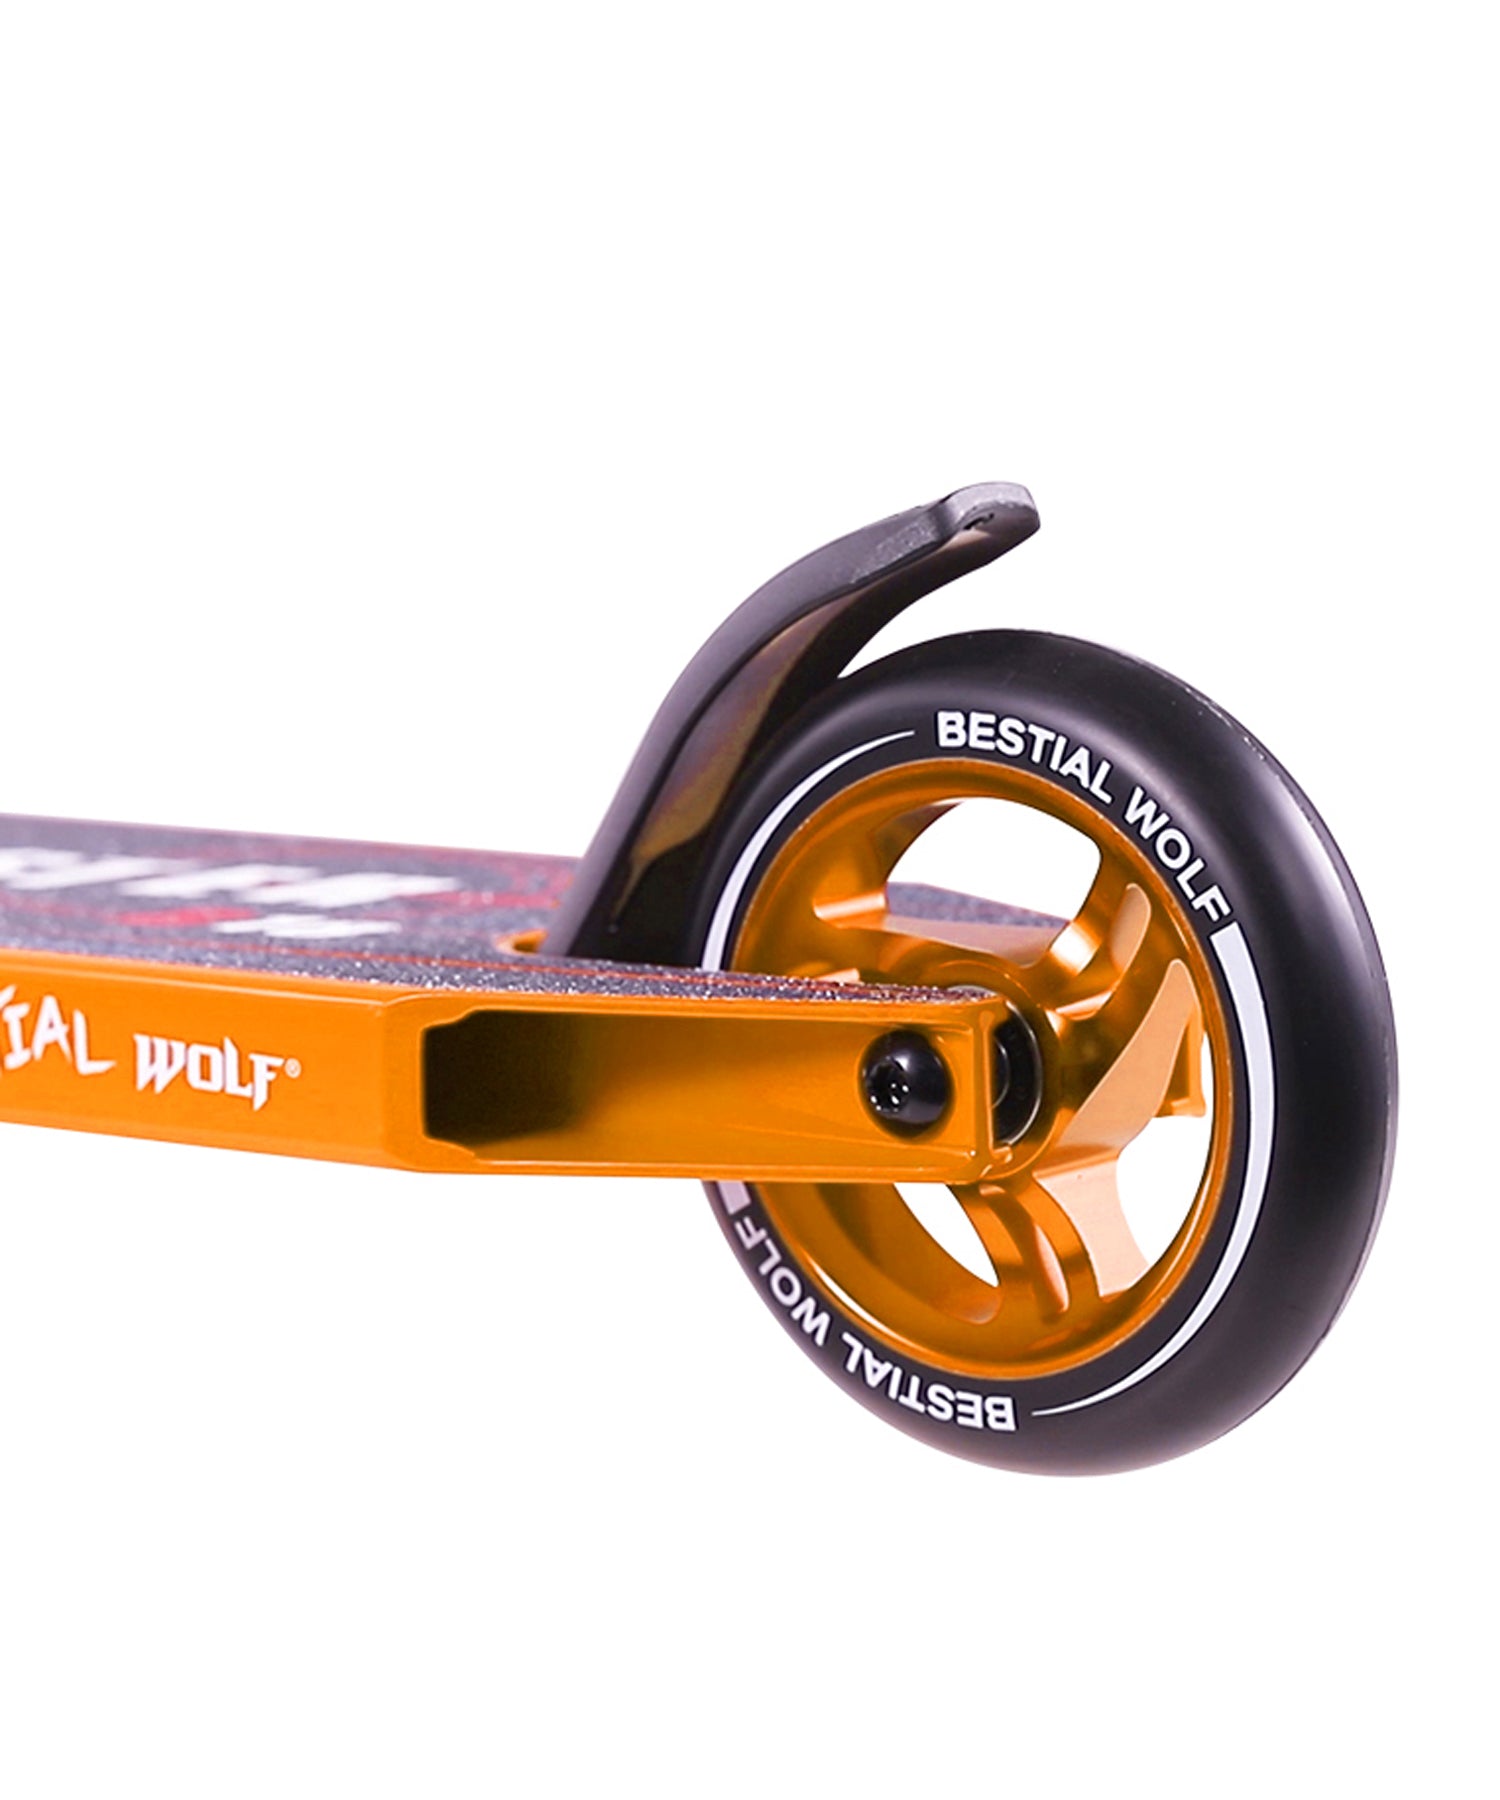 bestial-wolf-scoter-completo-booster-b18-color-naranja-horquilla de aluminio-ruedas-aluminio-modelo-profesional